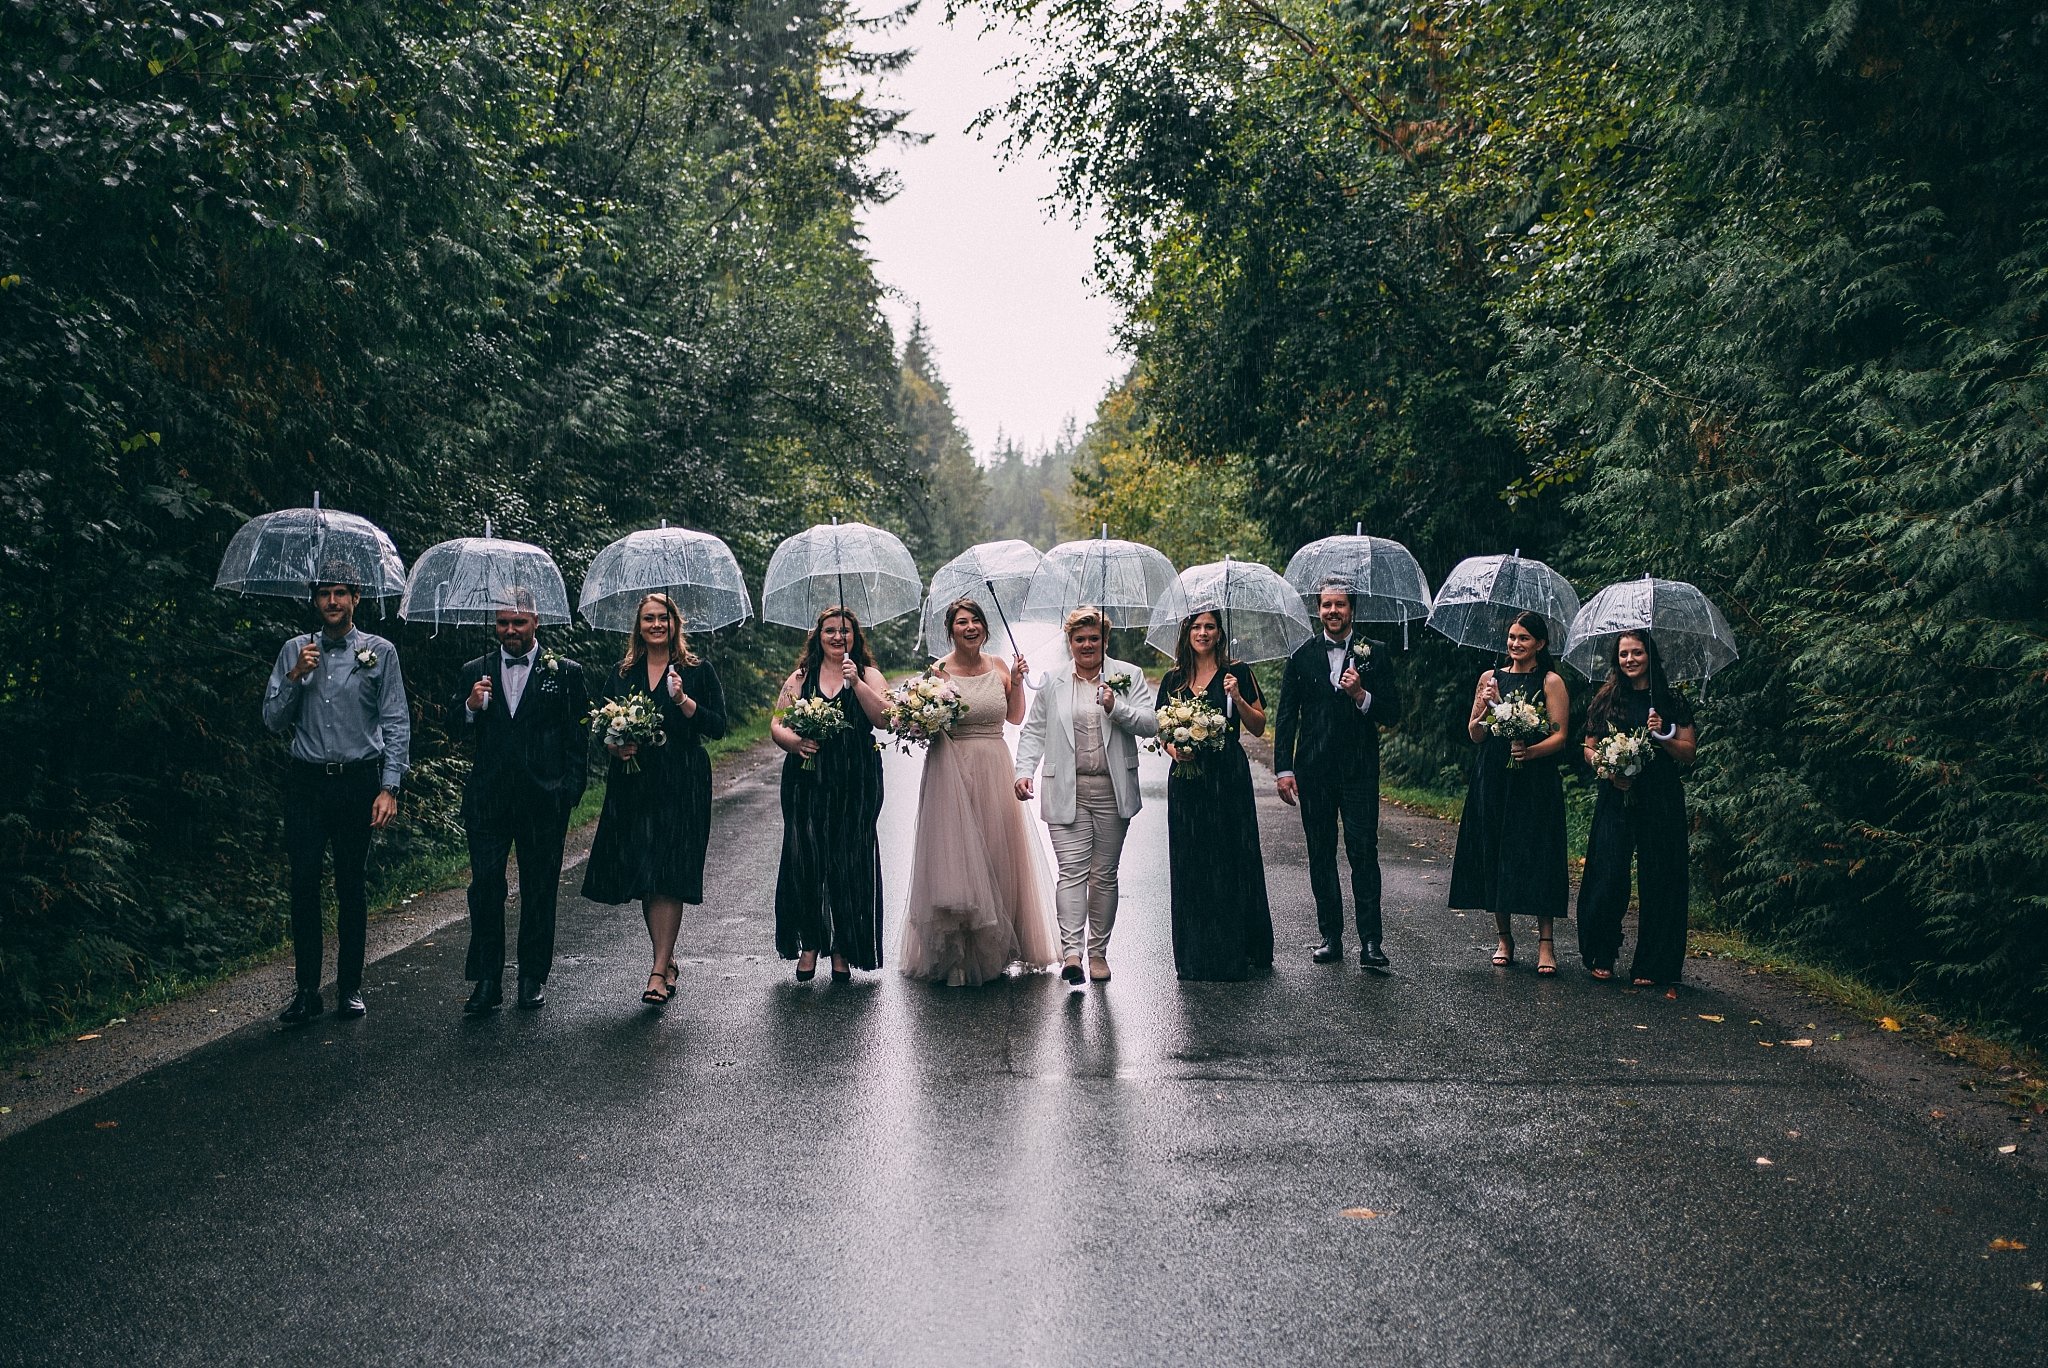 wedding party holding umbrellas on road
